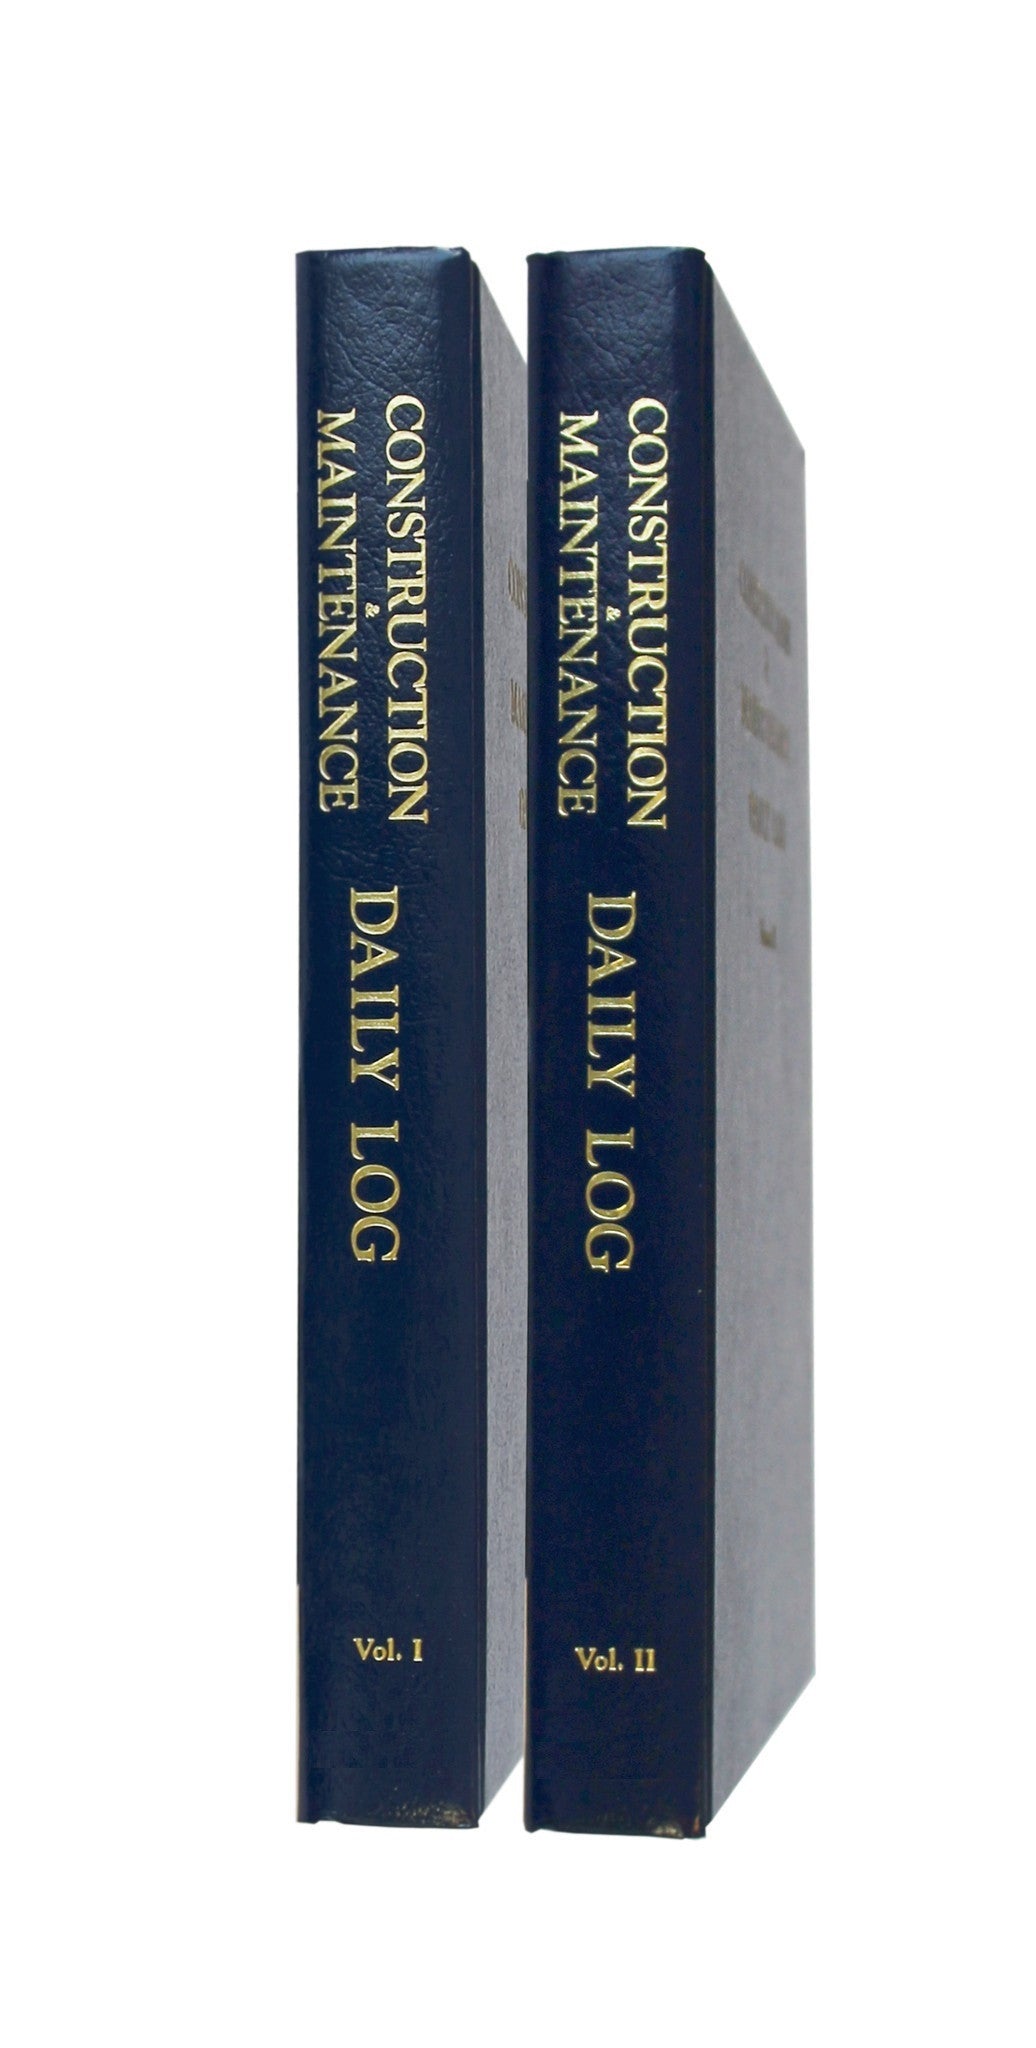 Construction & Maintenance (2 Volume Set) Daily Log Book - Spine